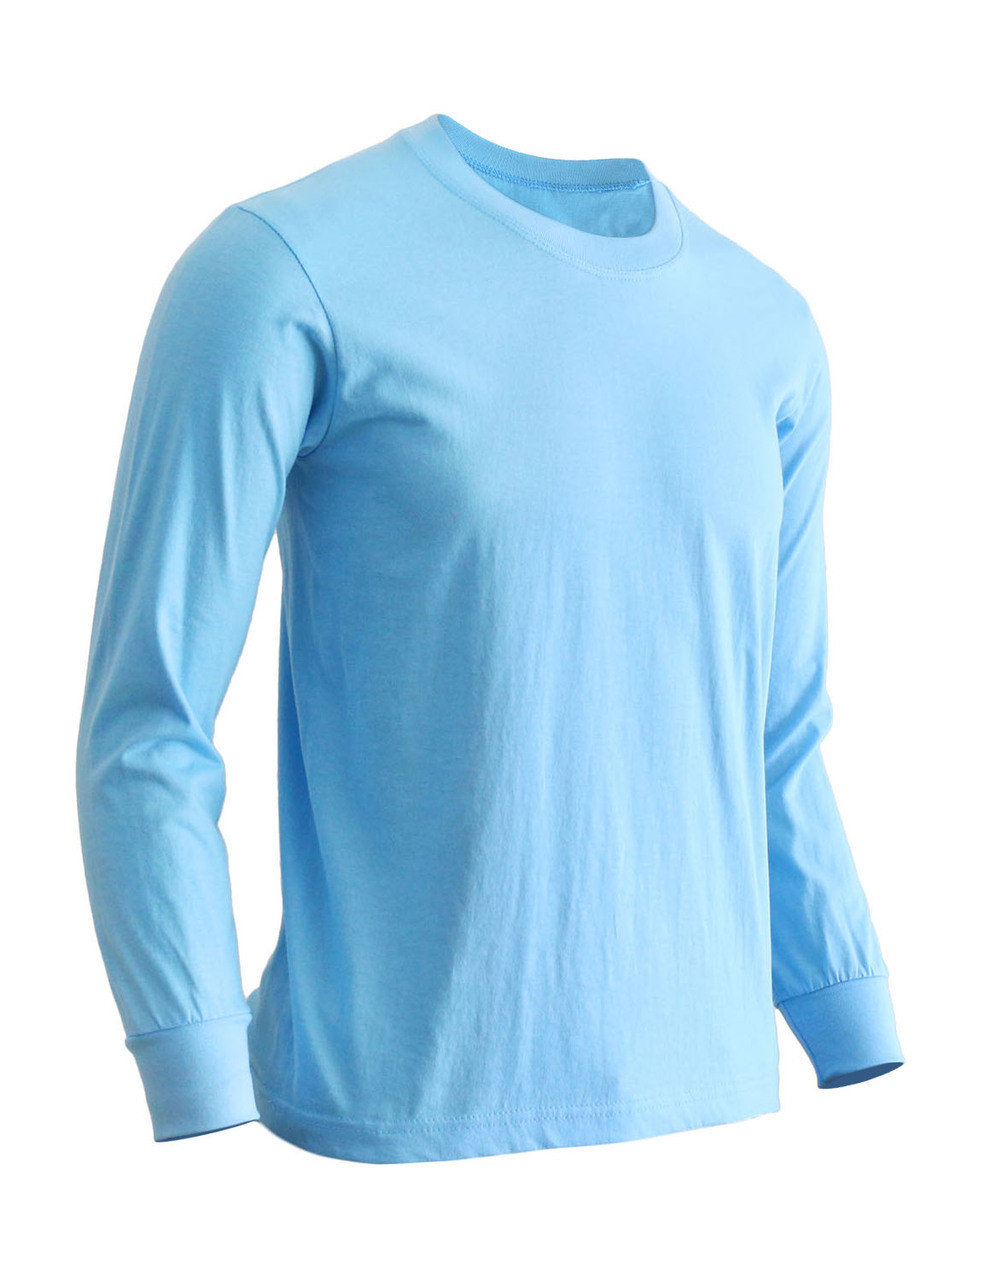 Basic round neck style cotton T-shirt Crew neck long sleeves shirt-Sky blue